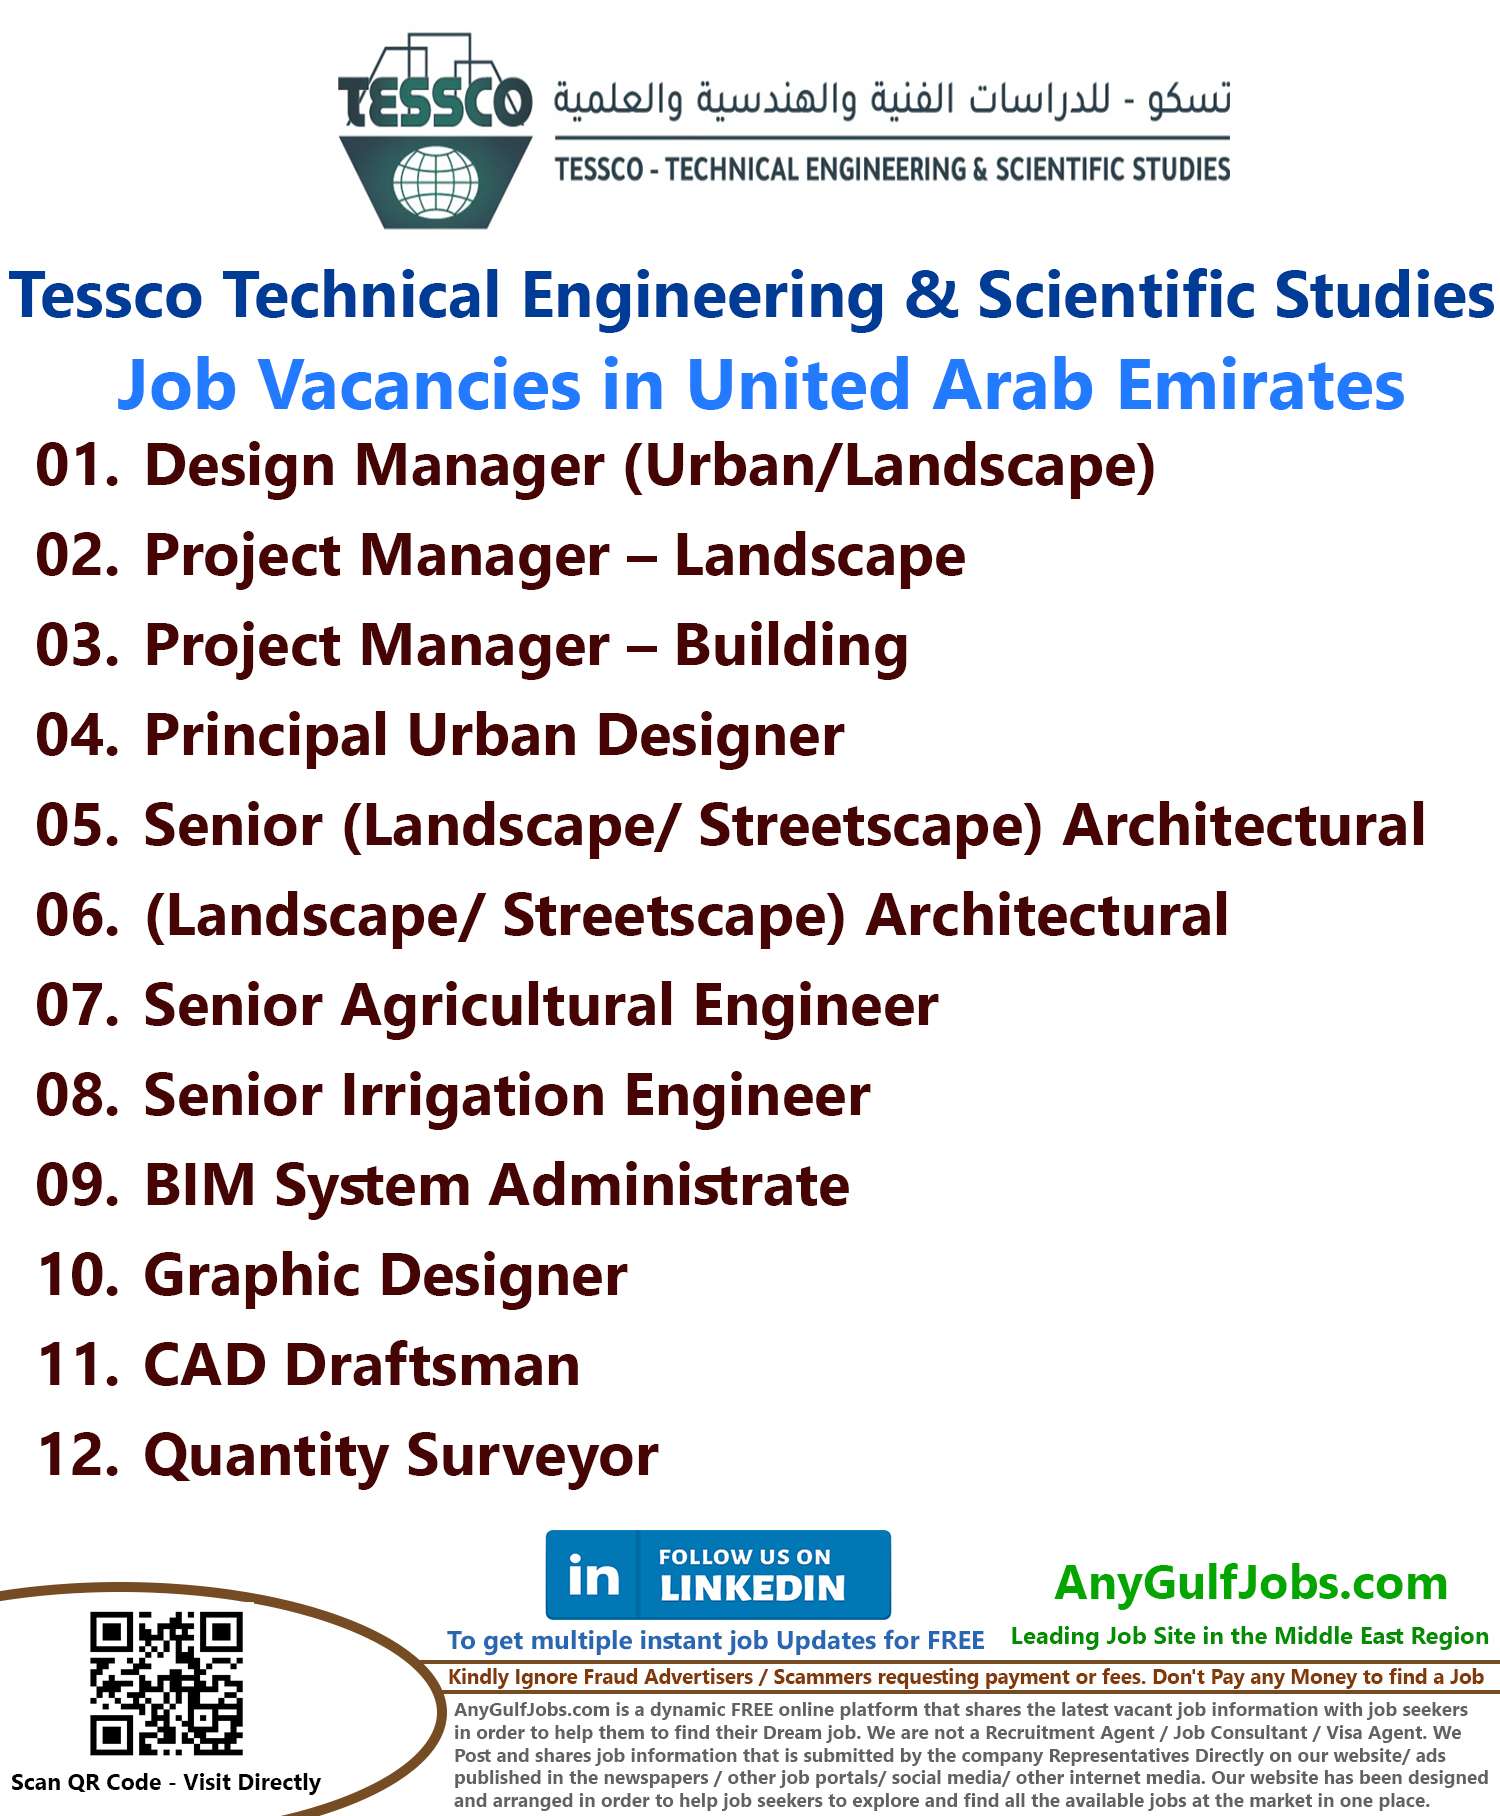 List of  Tessco Technical Engineering & Scientific Studies Jobs - United Arab Emirates